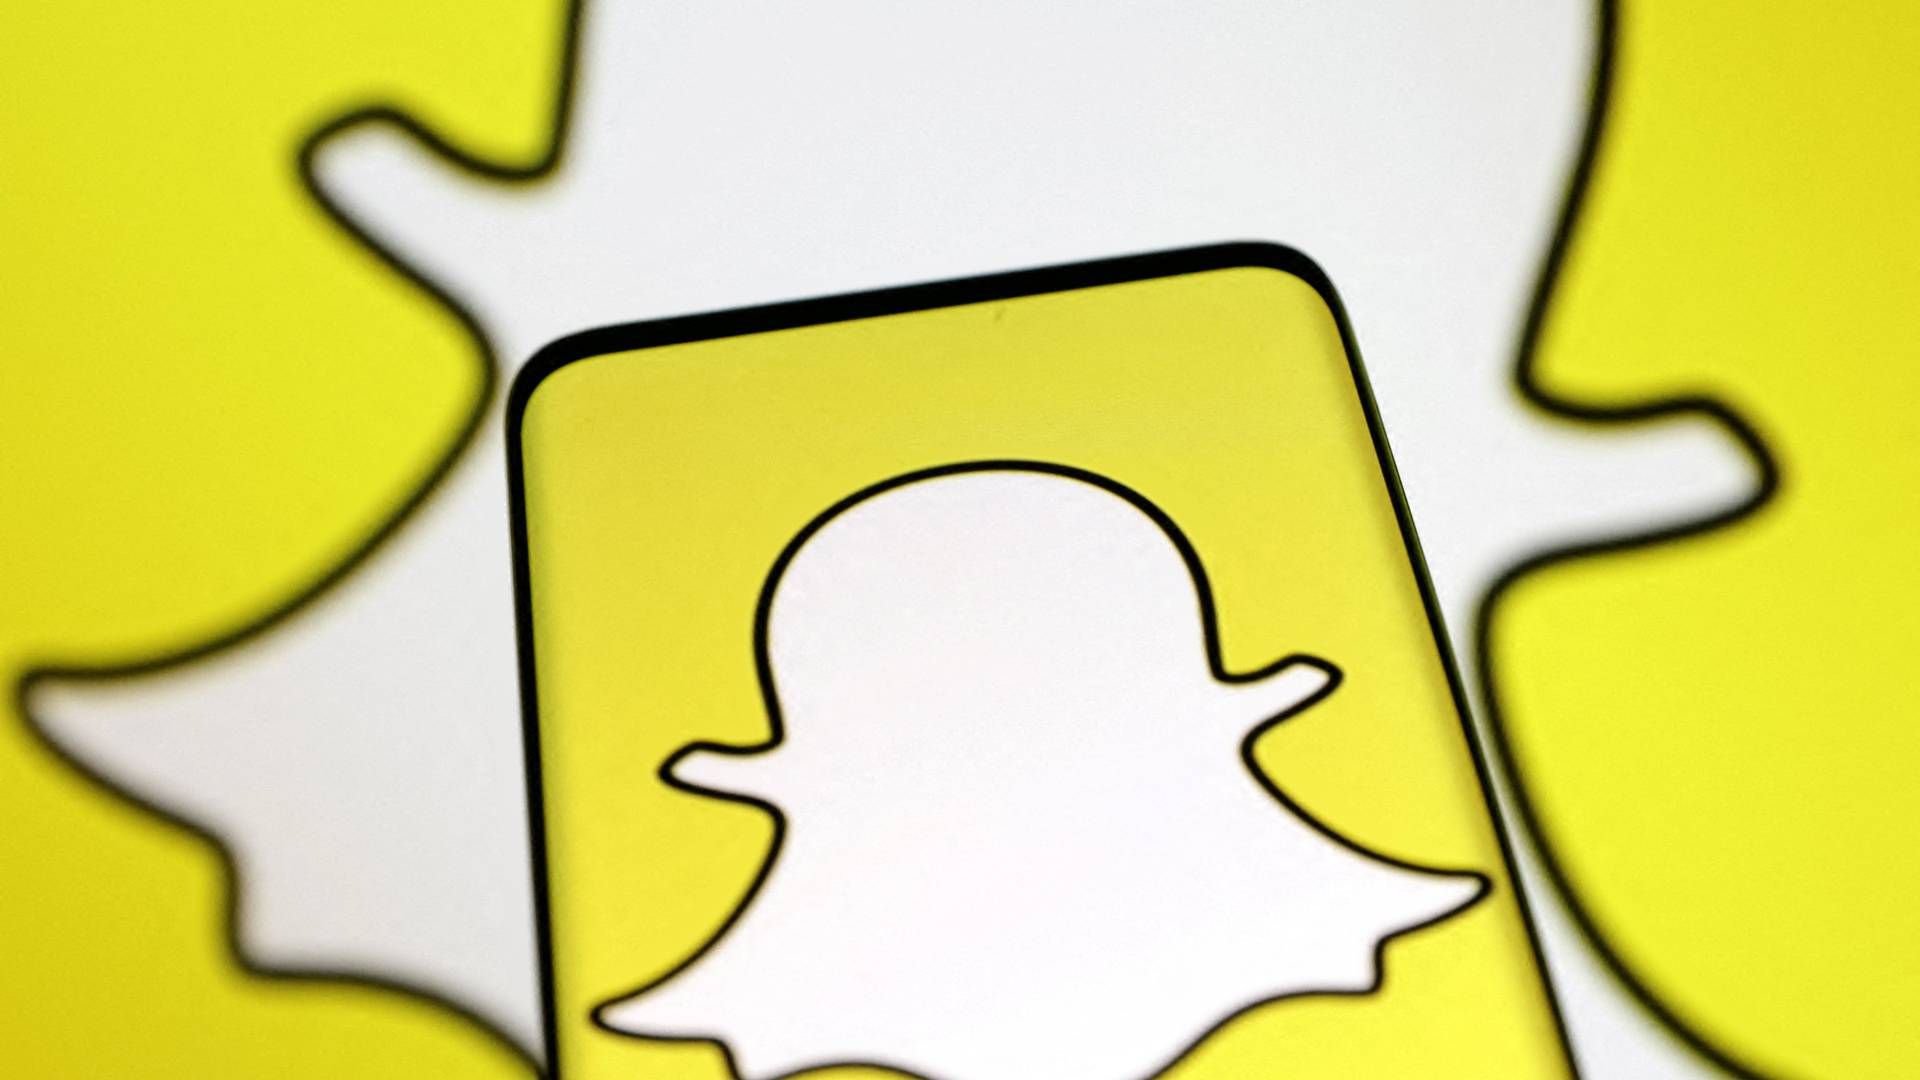 Den sociale medieplatform Snapchat har rundet fem mio. betalende brugere på Snapchat+. | Foto: Dado Ruvic/Reuters/Ritzau Scanpix